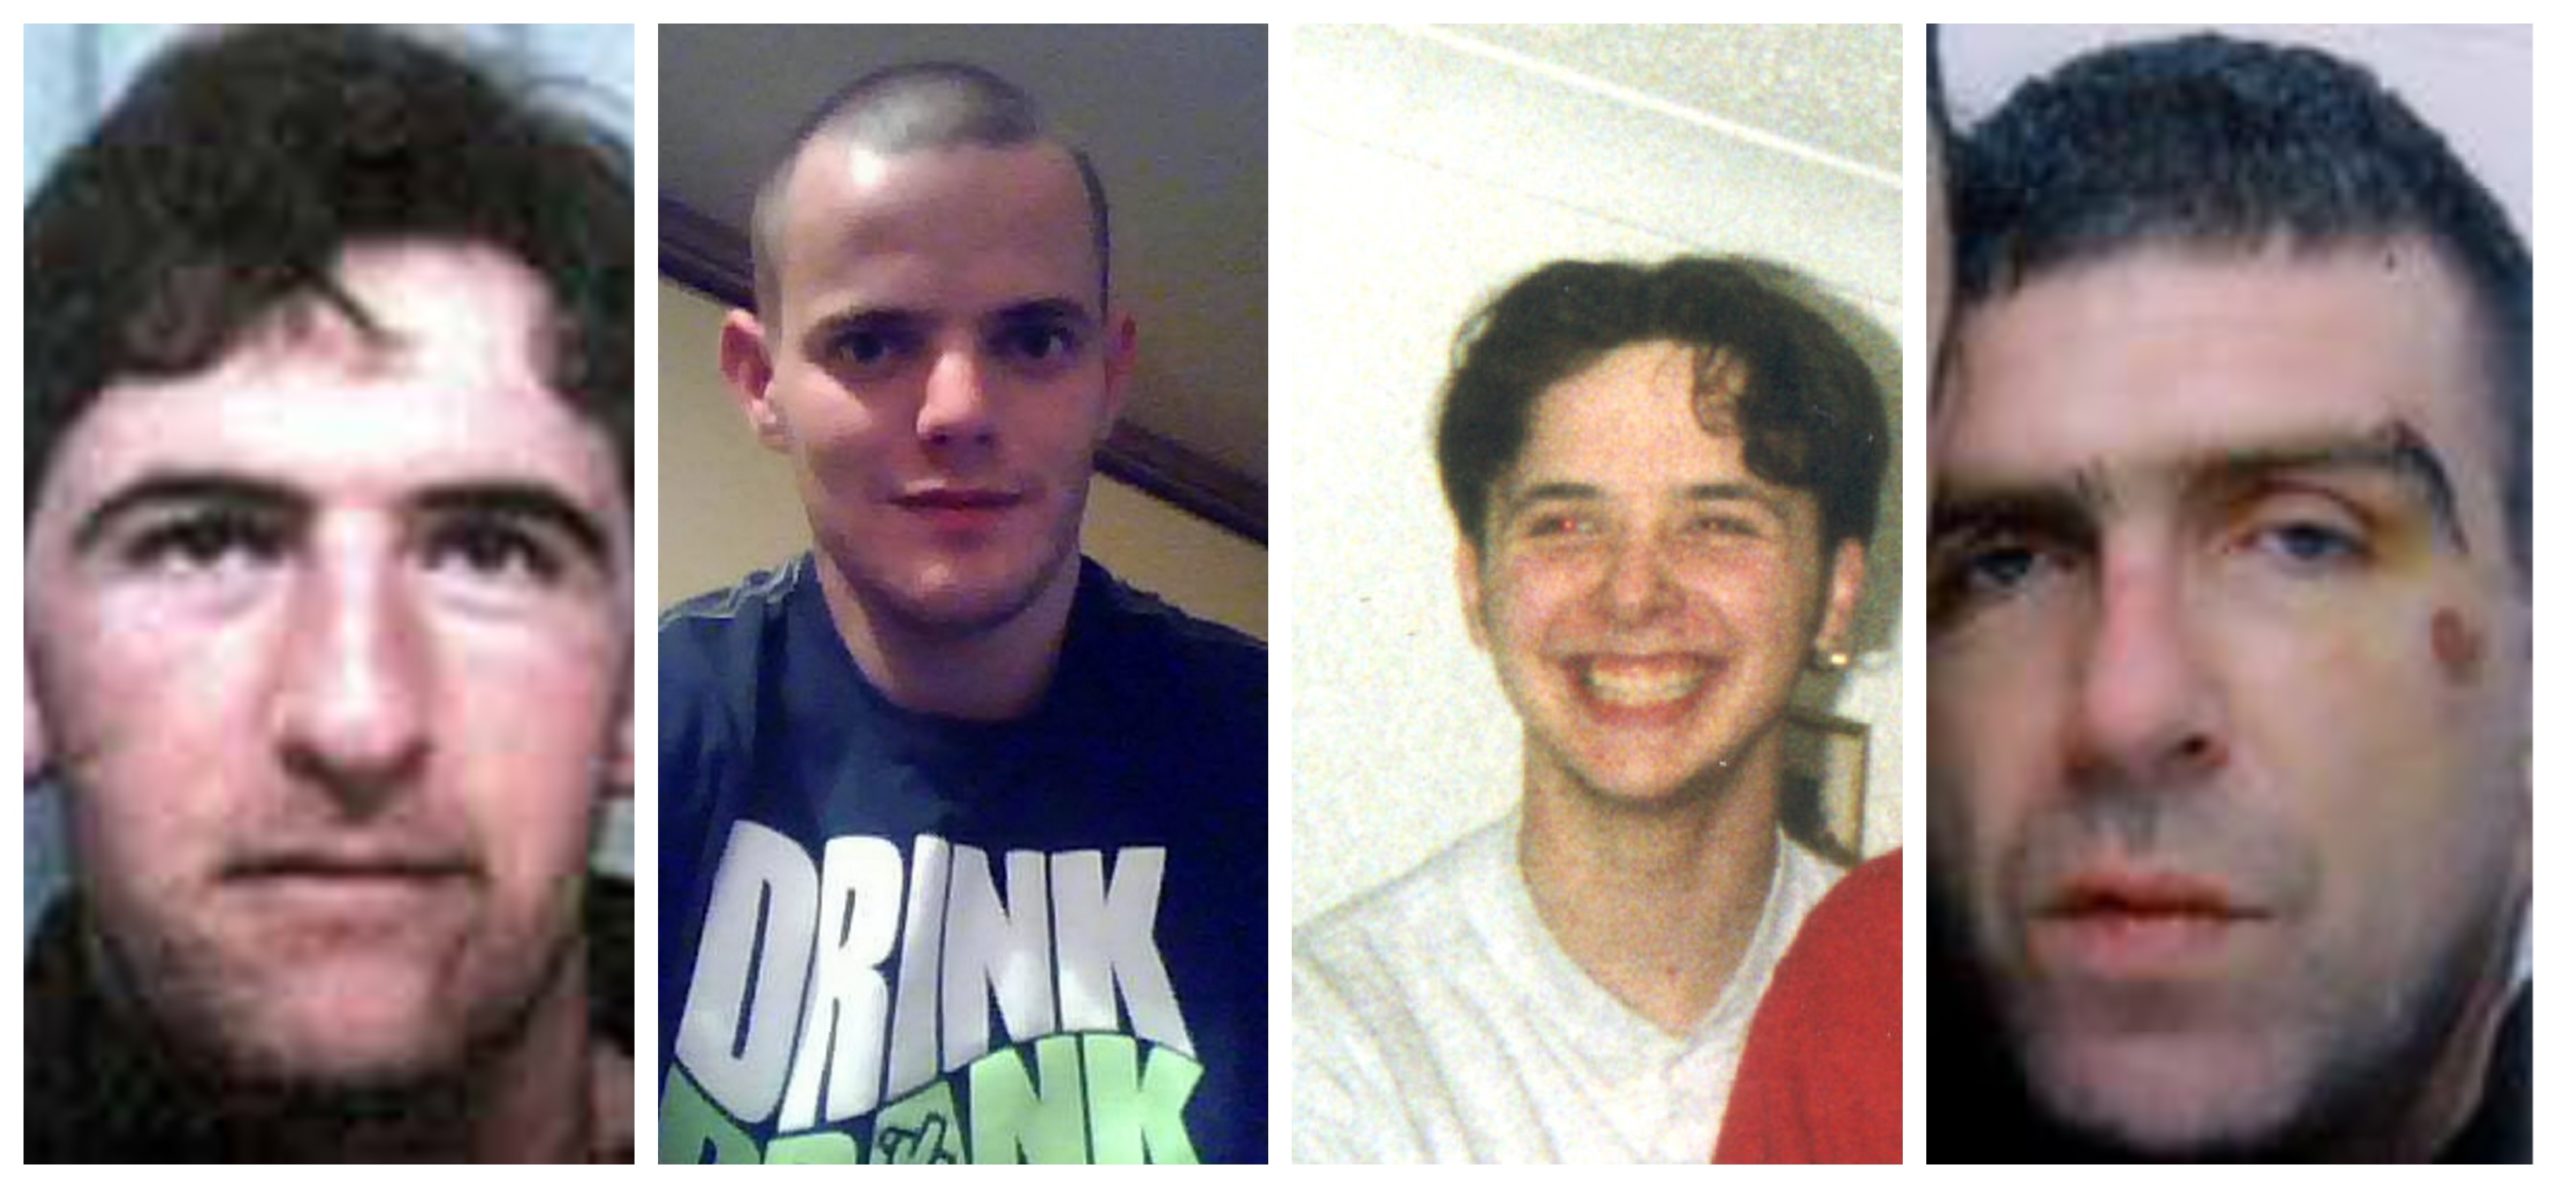 Missing people Peter McGuire, Allan Bryant Jnr., Kenneth Jones and Sandy Clarke.